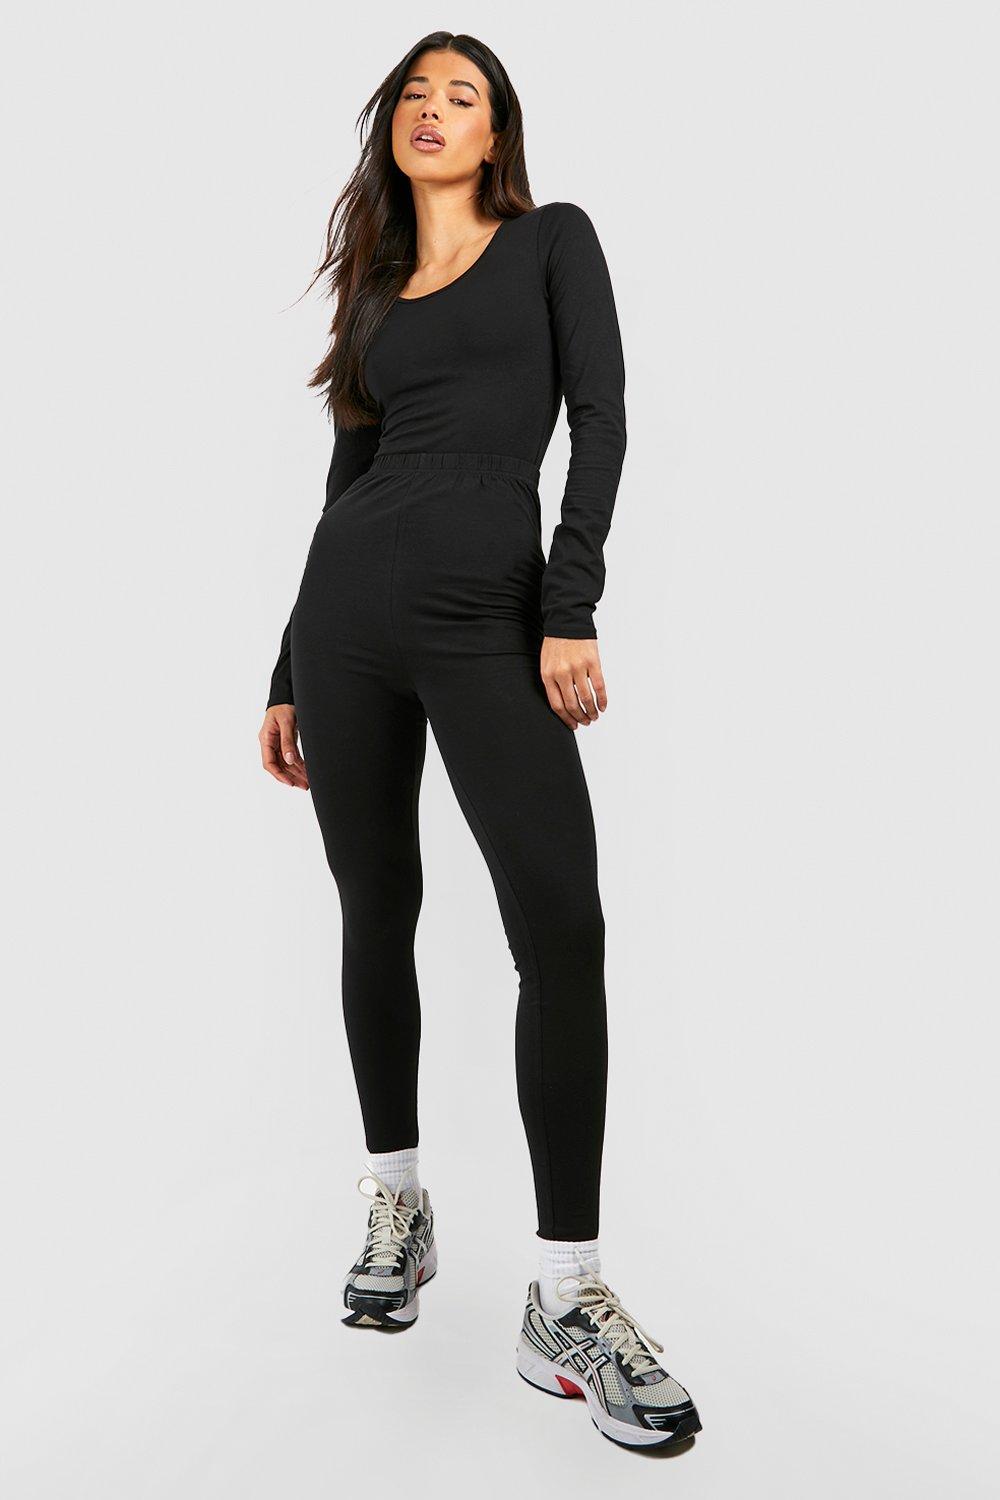 https://media.boohoo.com/i/boohoo/dzz96690_black_xl_3/female-black-black-tall-long-sleeve-basic-bodysuit